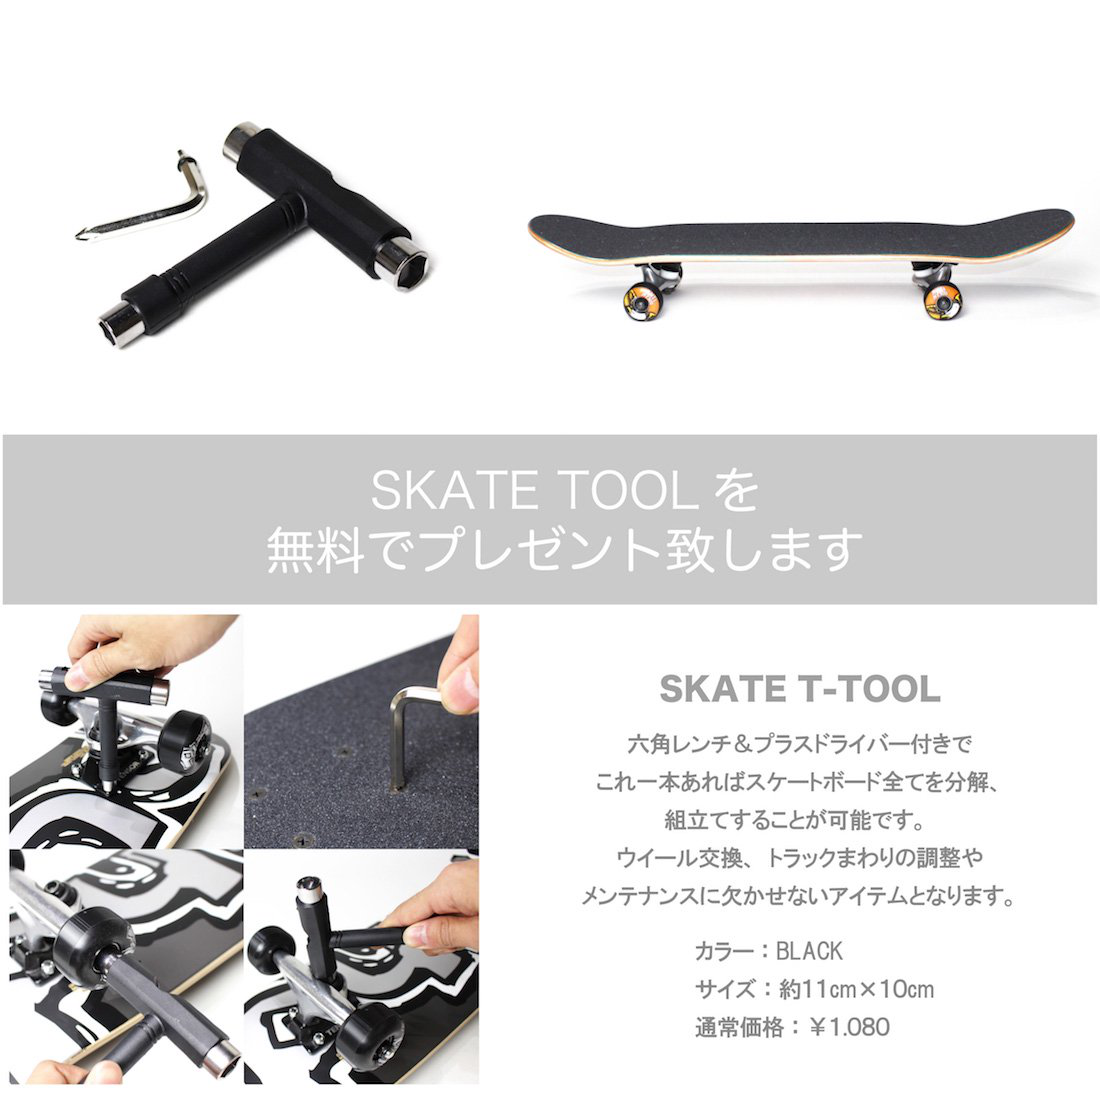 【7.25】Premium Skateboards - Kids Complete Set "Naturia Red Monkey"